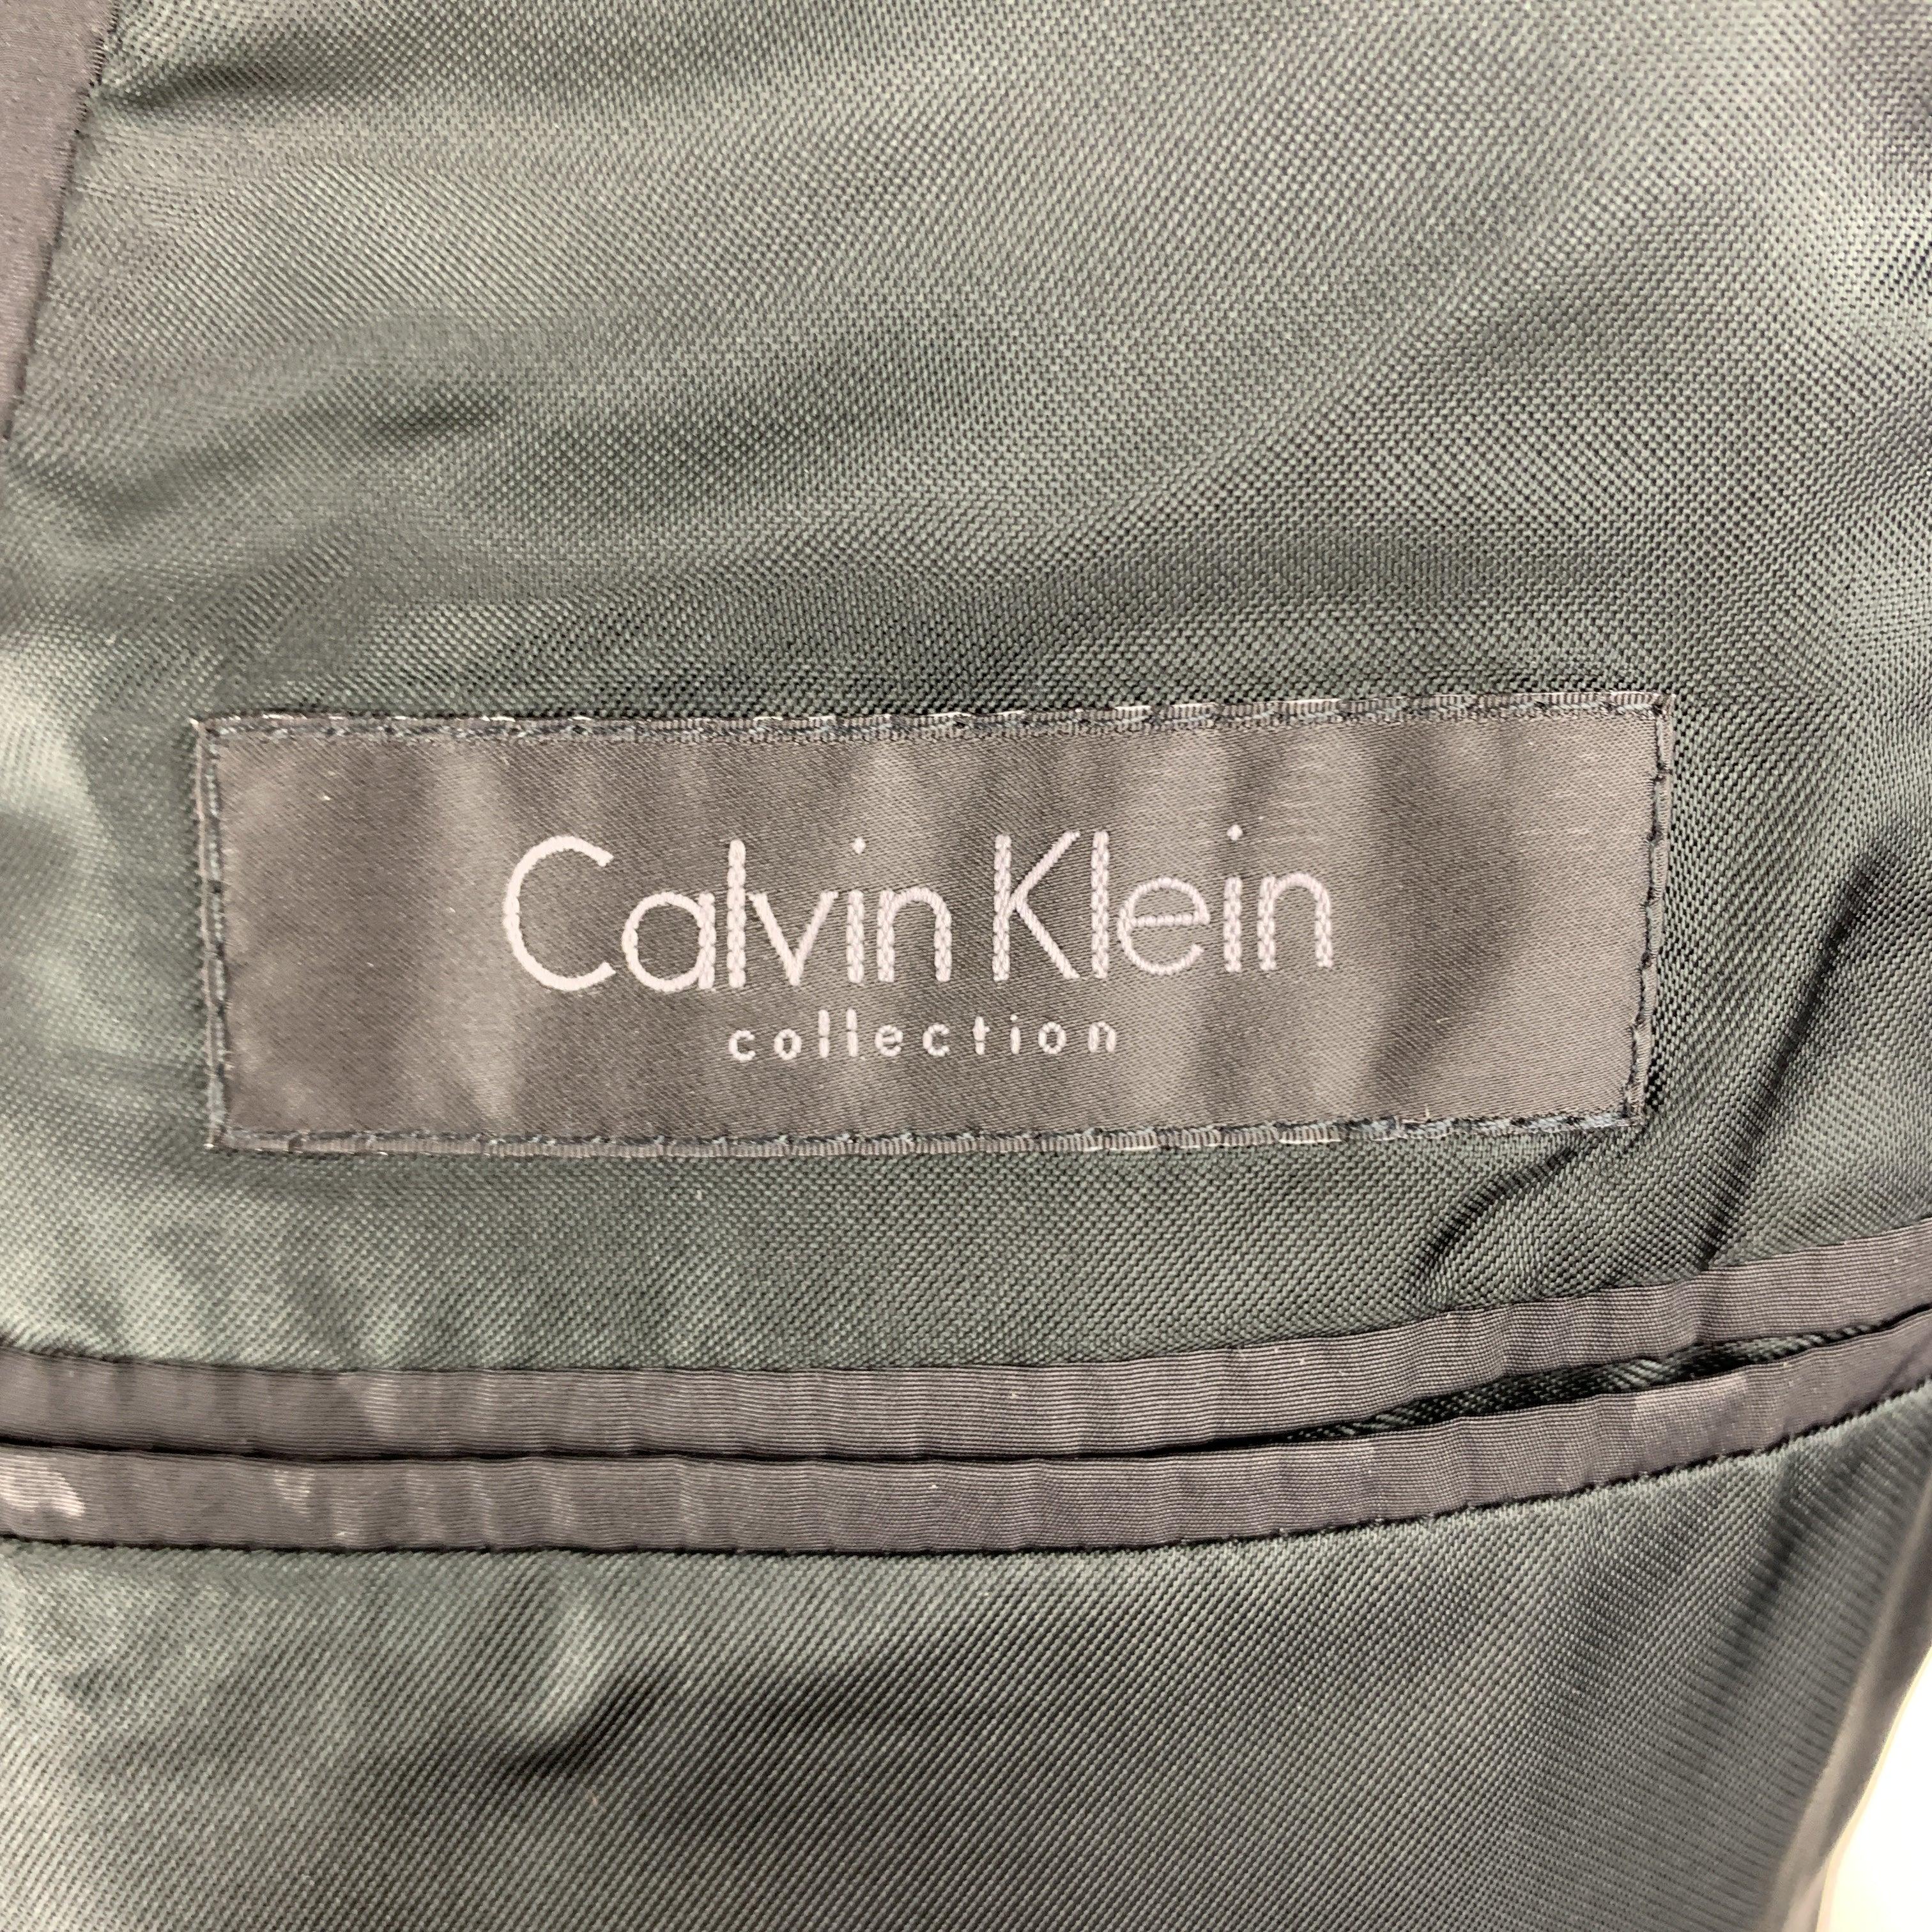 CALVIN KLEIN COLLECTION Size 36 Black on Black Floral Notch Lapel Sport Coat For Sale 4